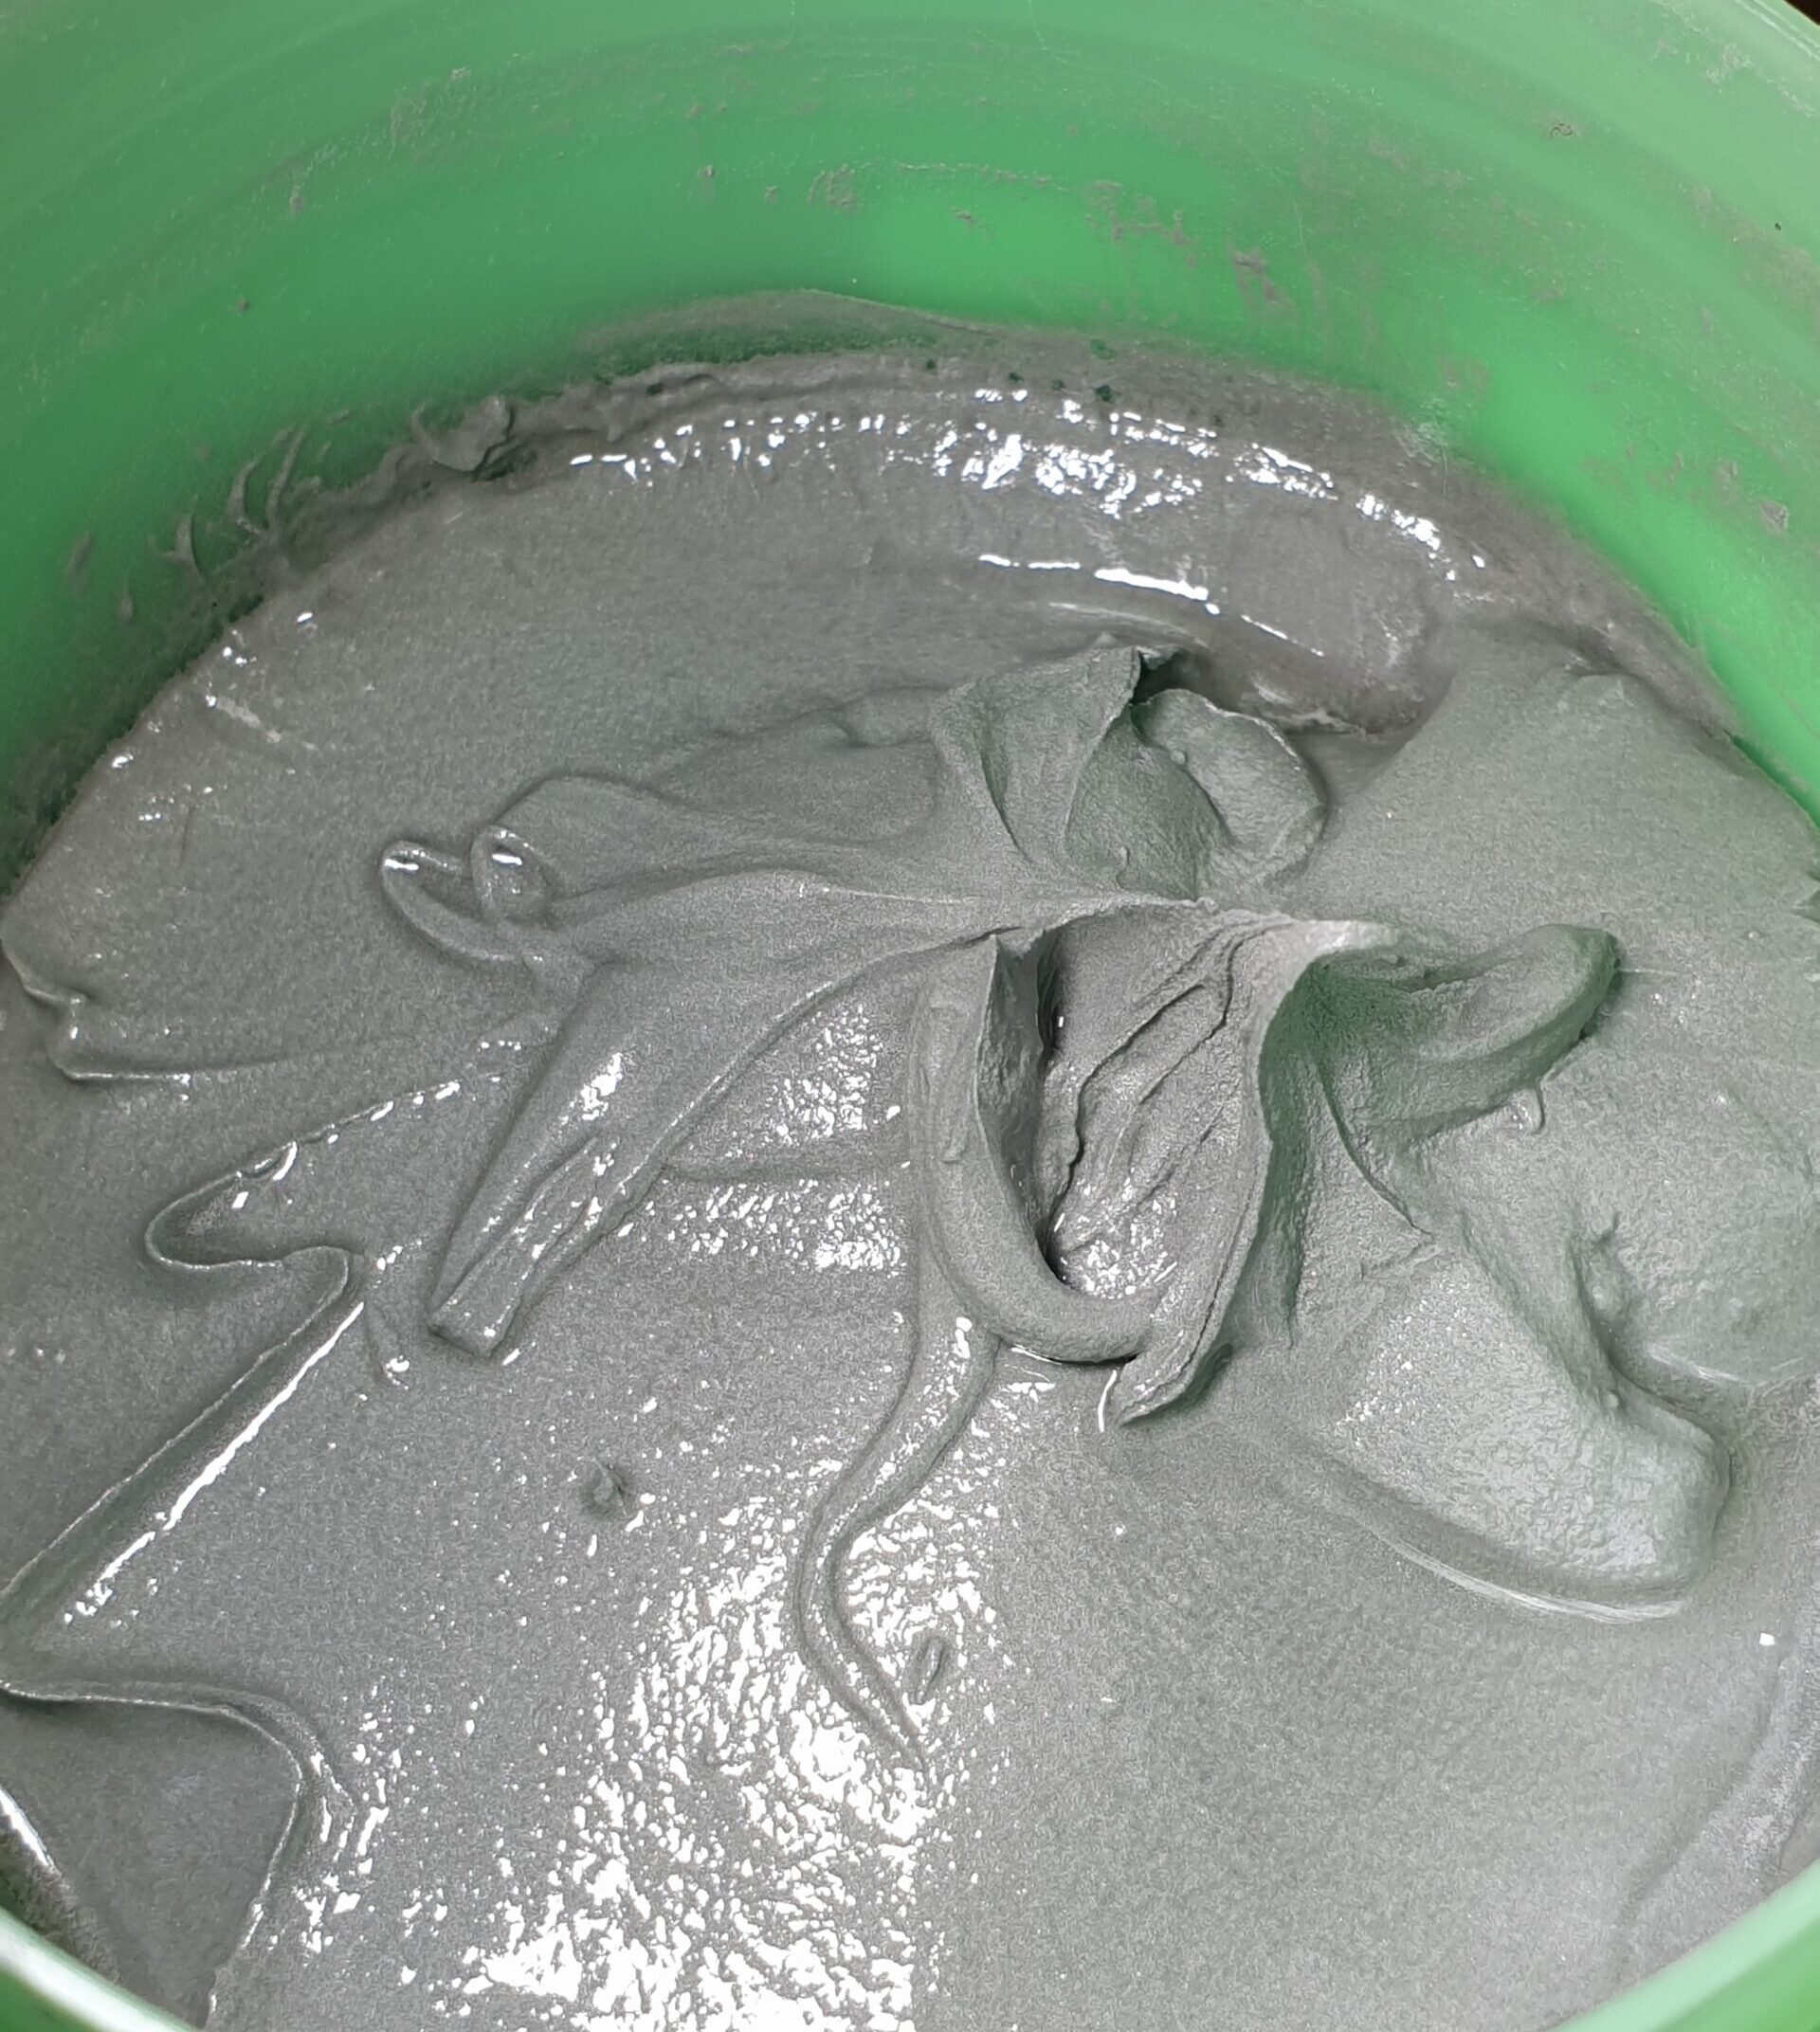 A big green tub of grey solder paste